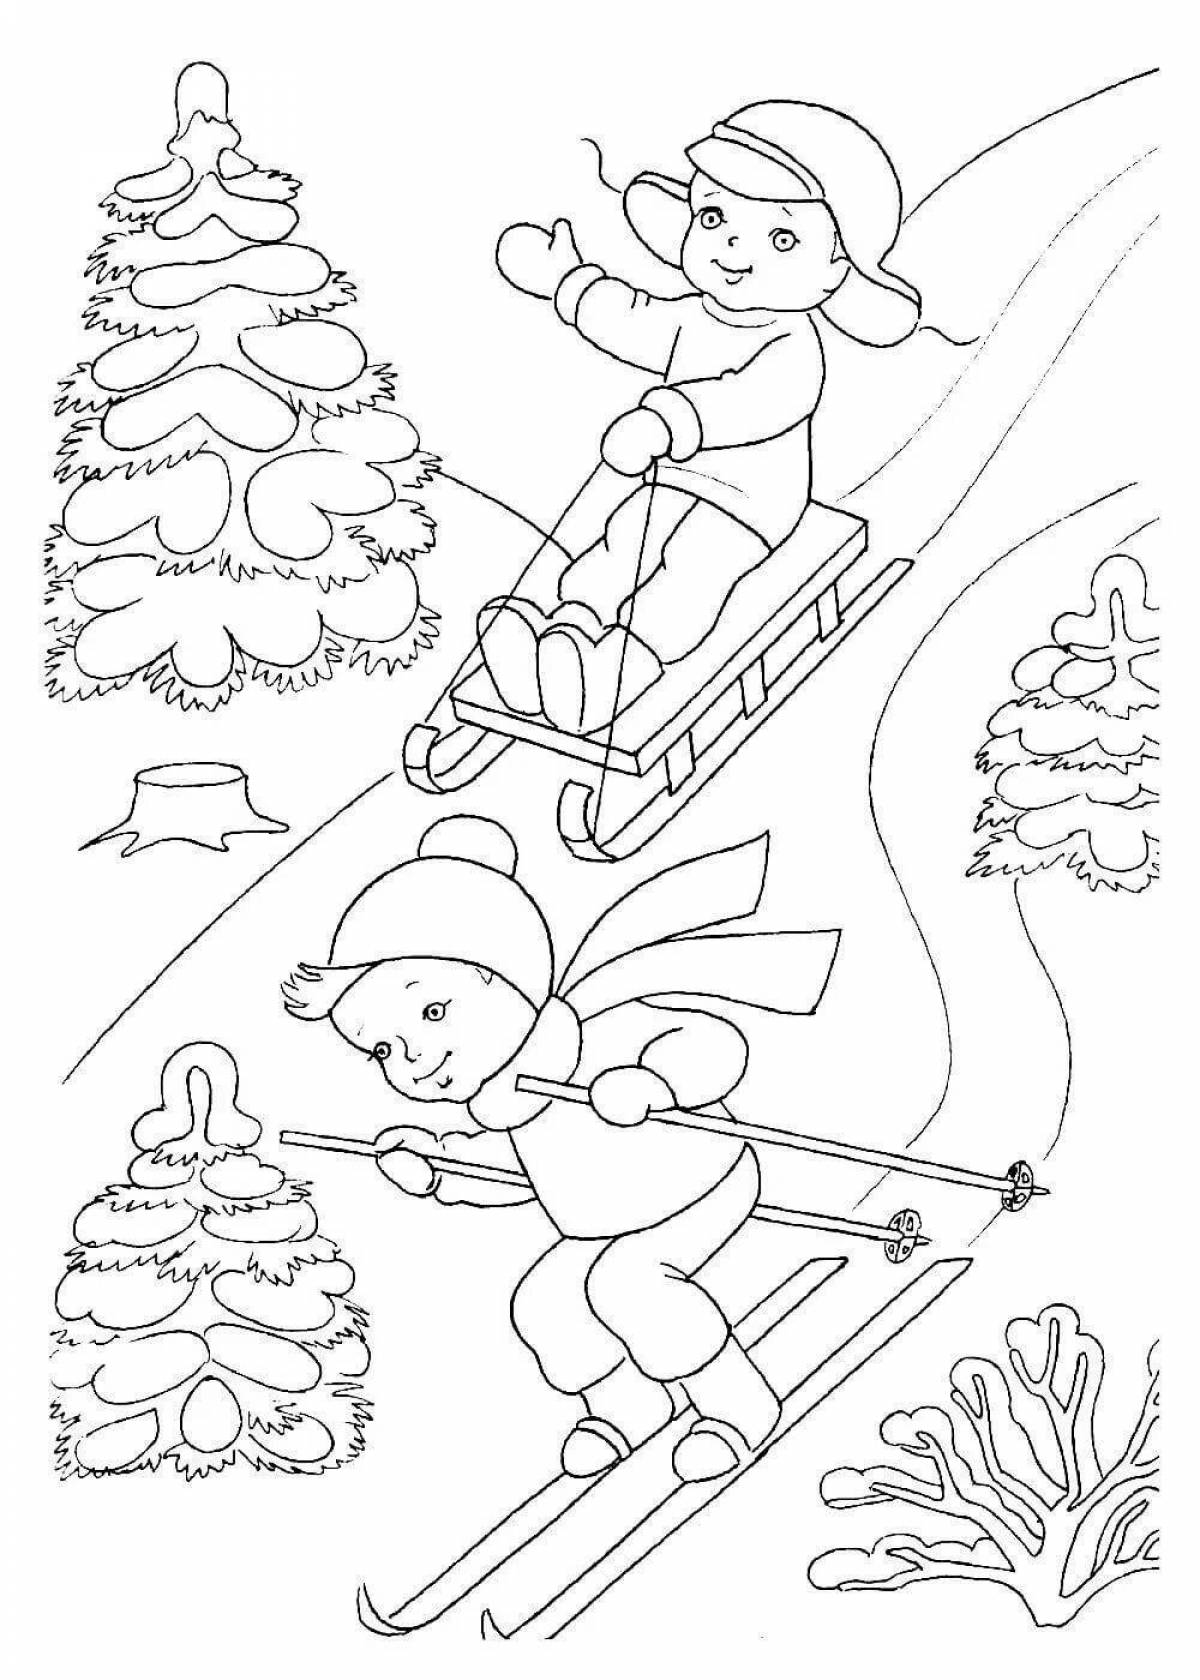 Fun coloring book winter games for kids